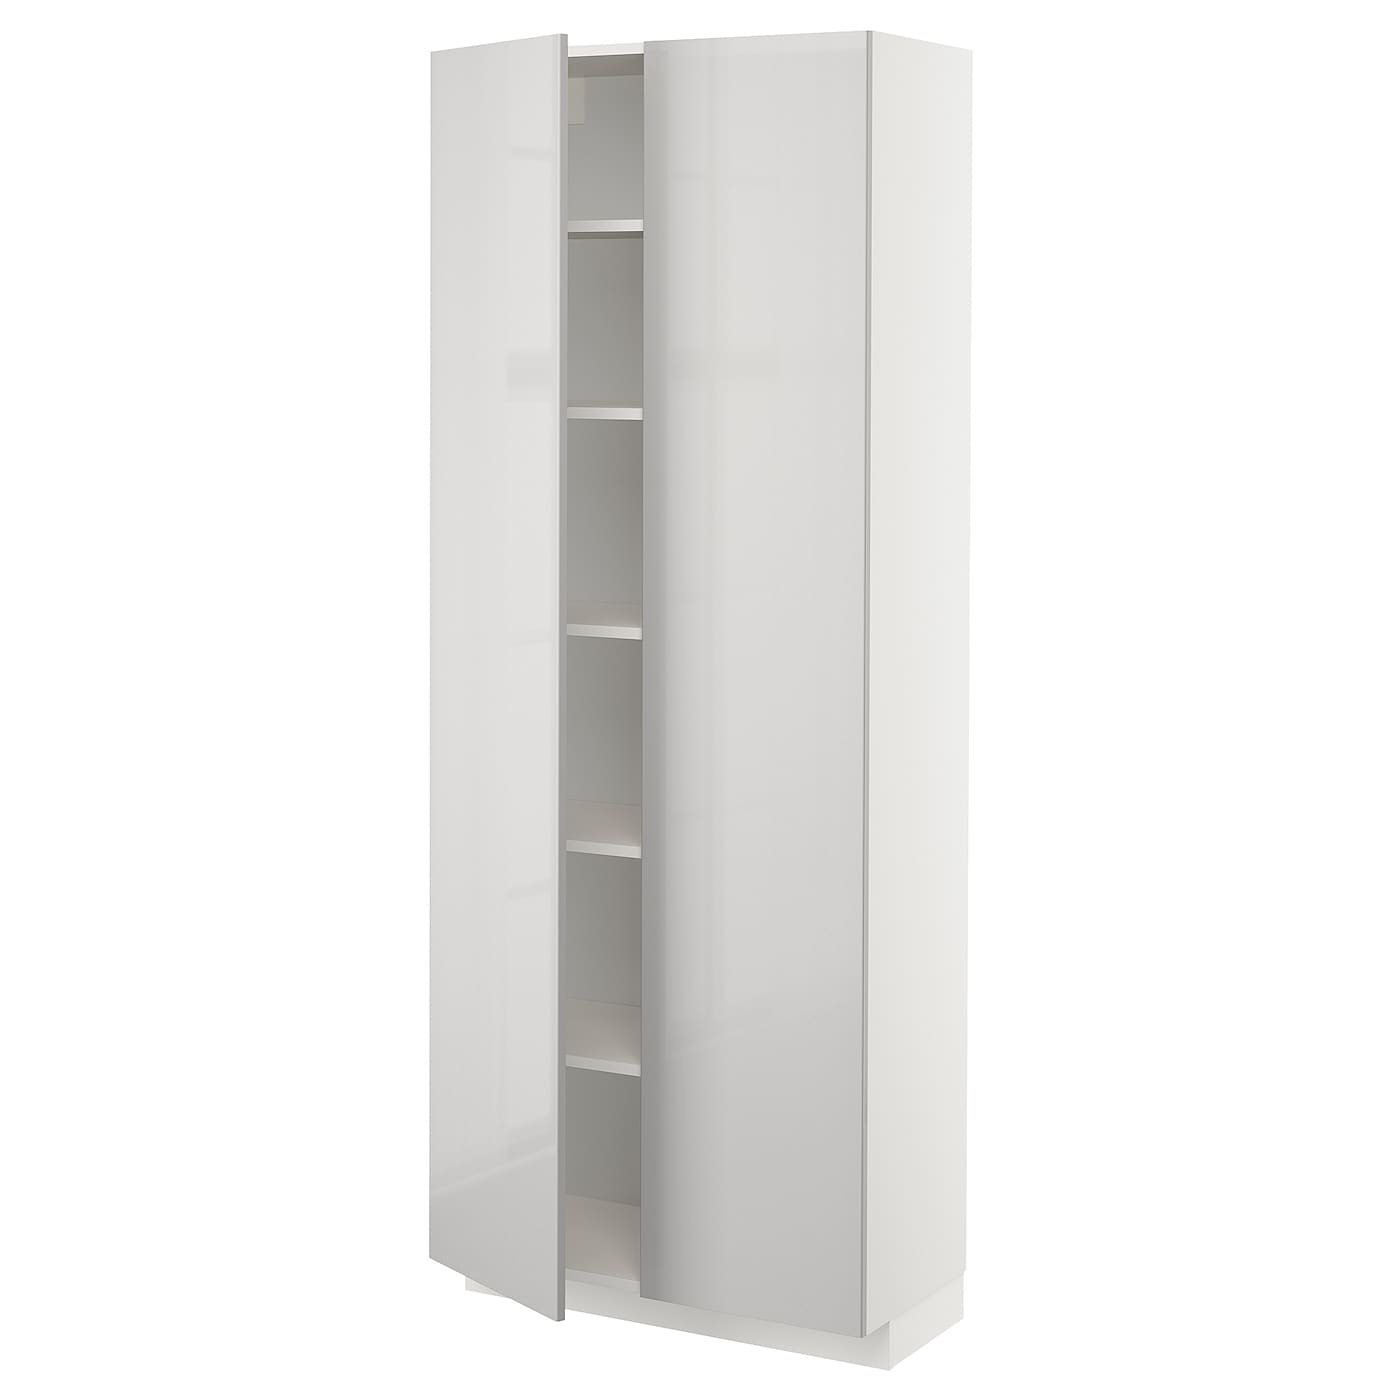 Высокий кухонный шкаф с полками - IKEA METOD/МЕТОД ИКЕА, 200х37х80 см, белый/светло-серый глянцевый